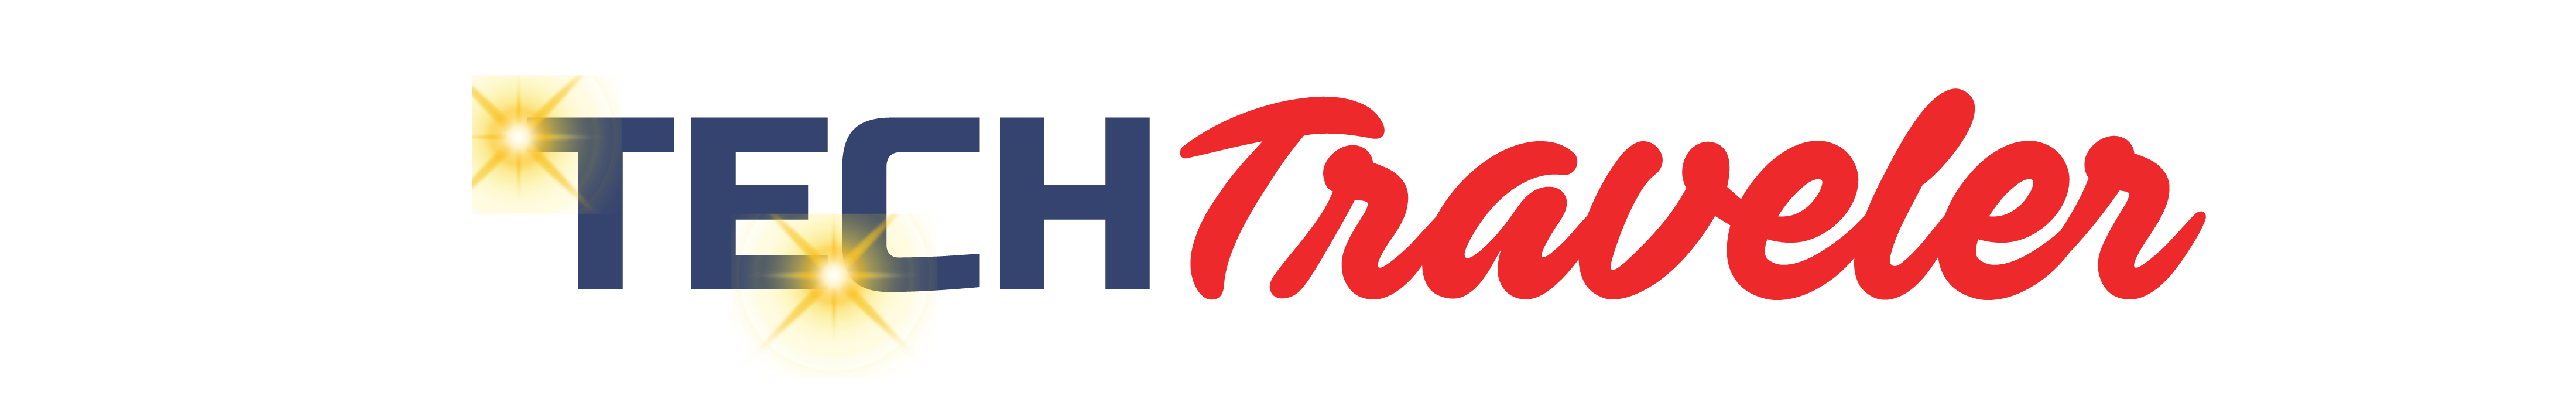 tech traveler logo@2x